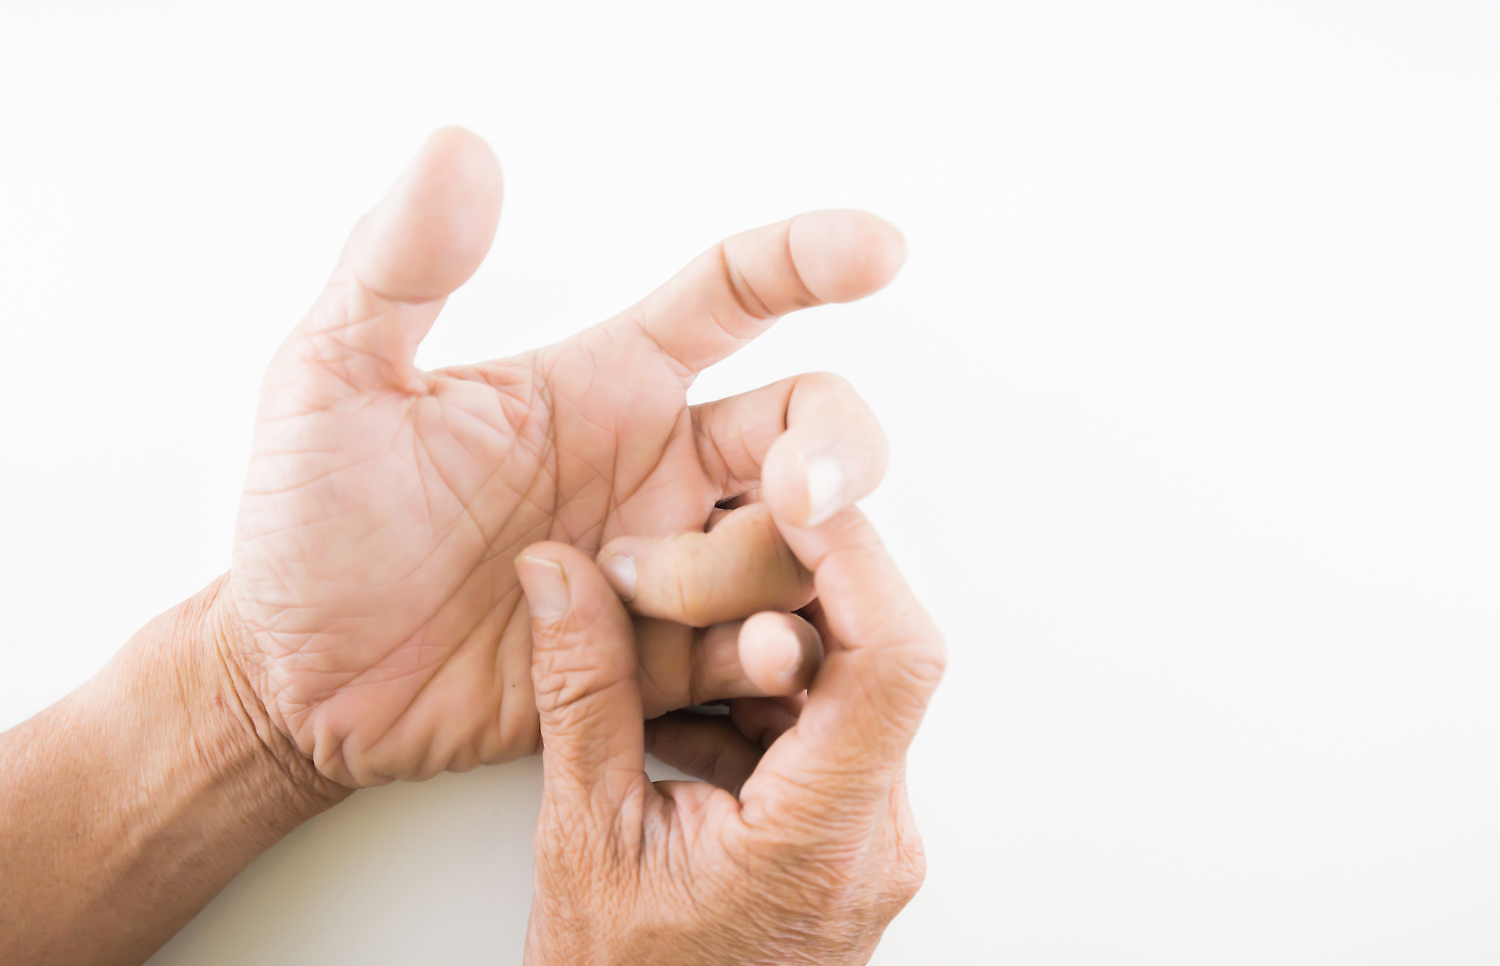 VA Disability Rating for Veterans With Trigger Finger